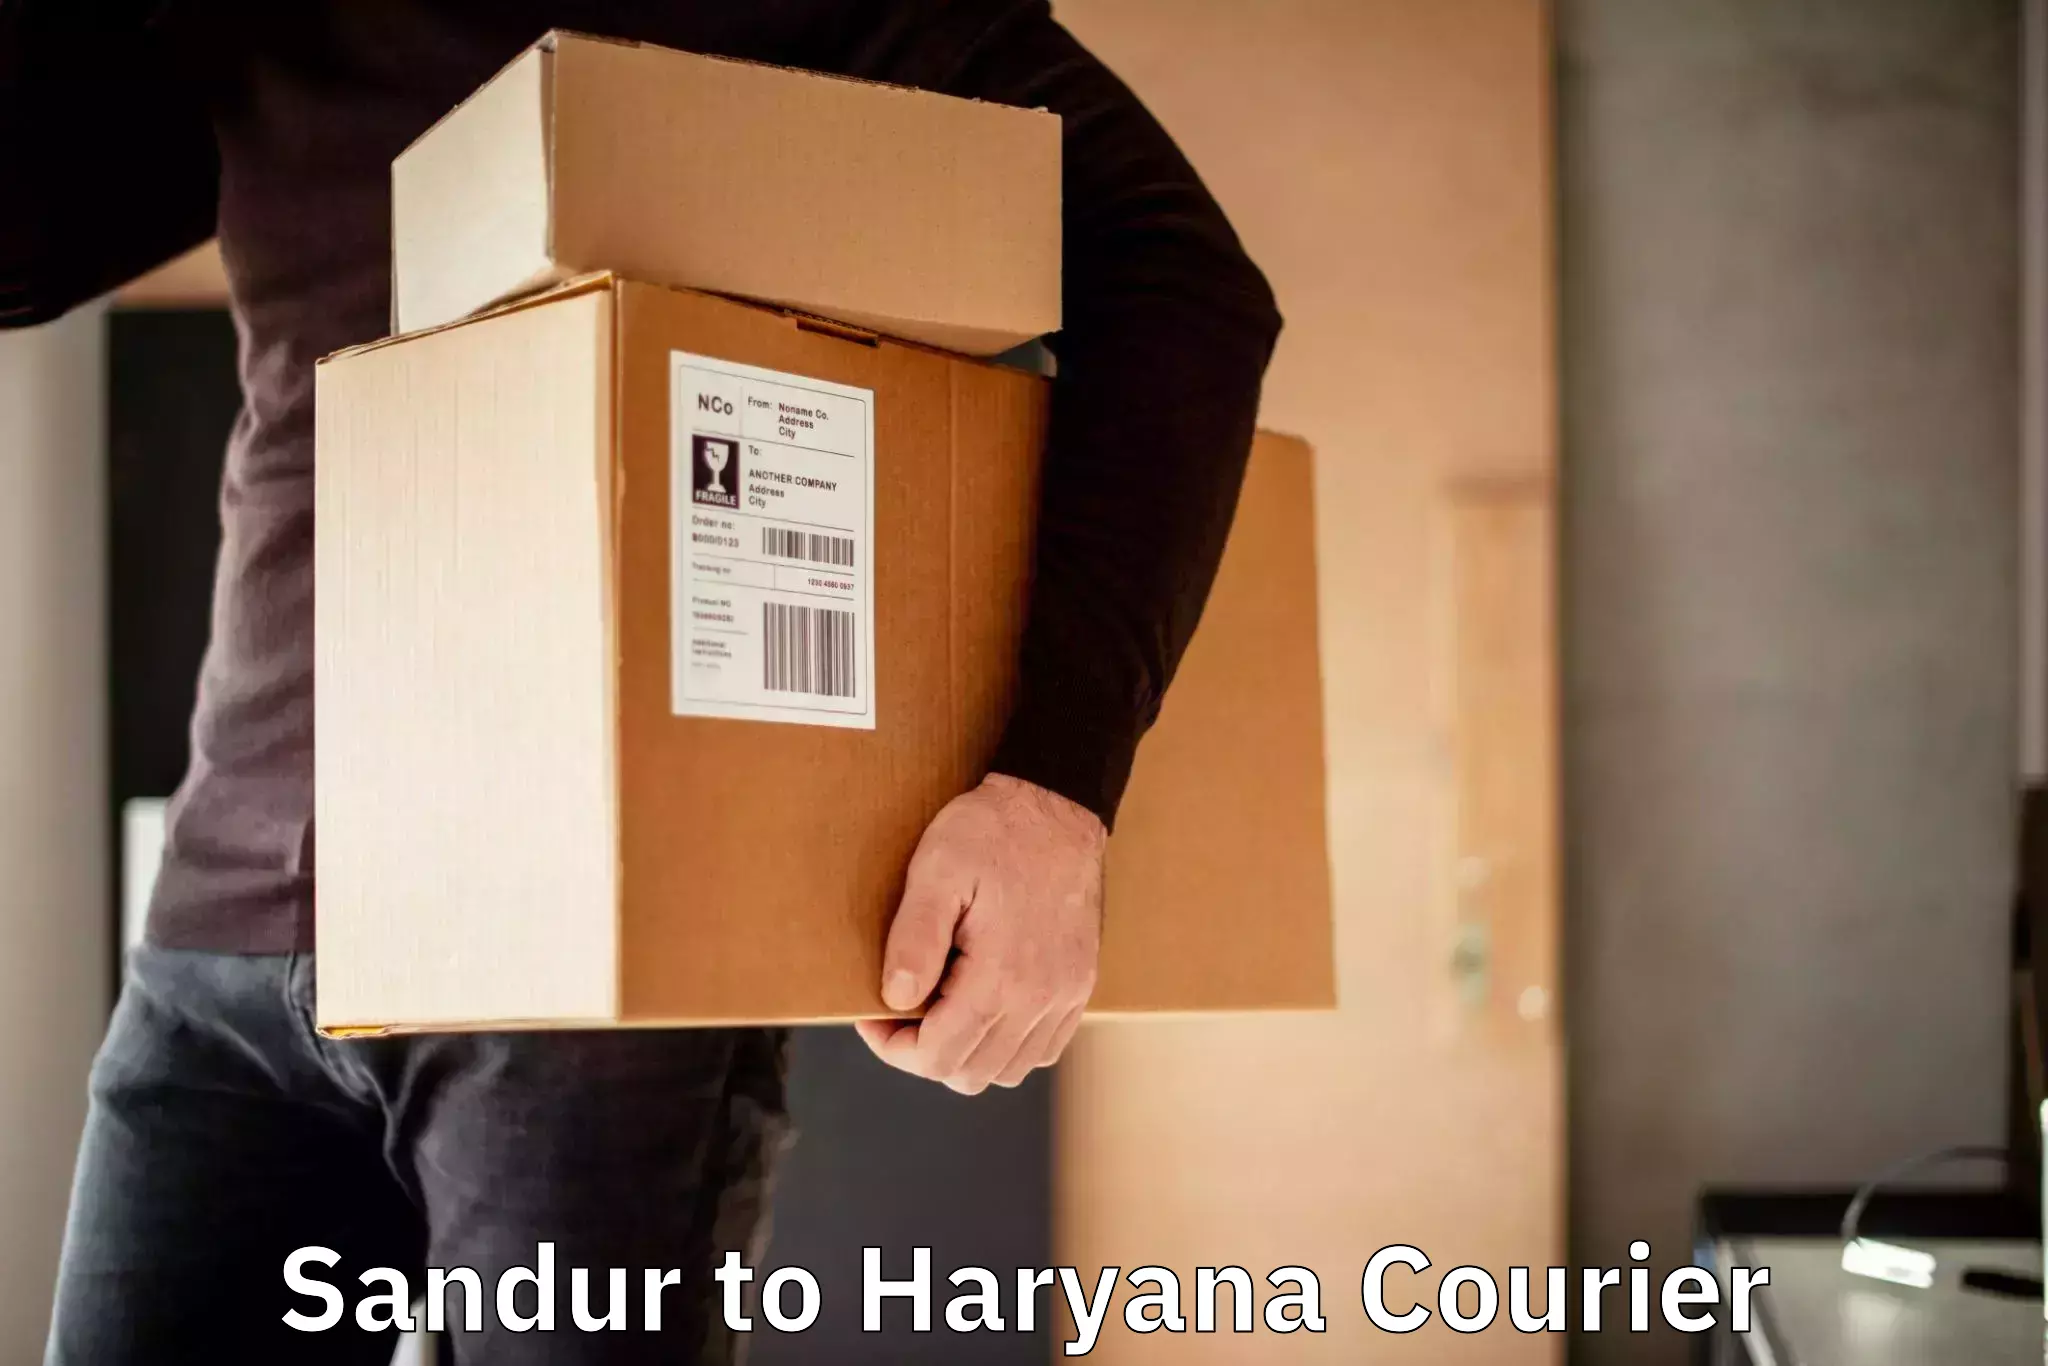 Courier service innovation Sandur to Bilaspur Haryana